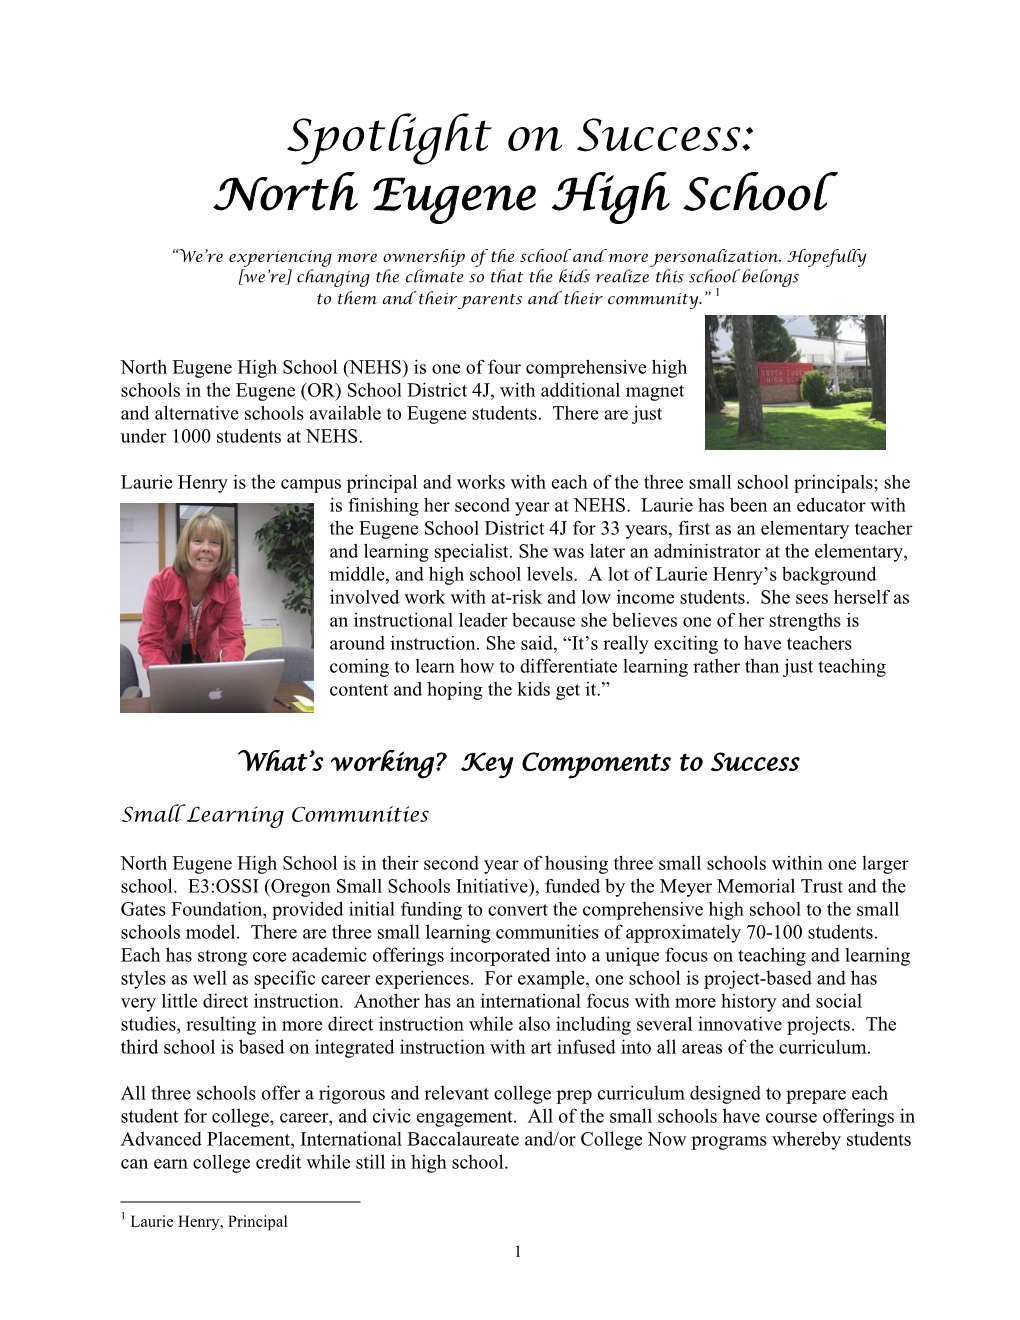 North Eugene High School